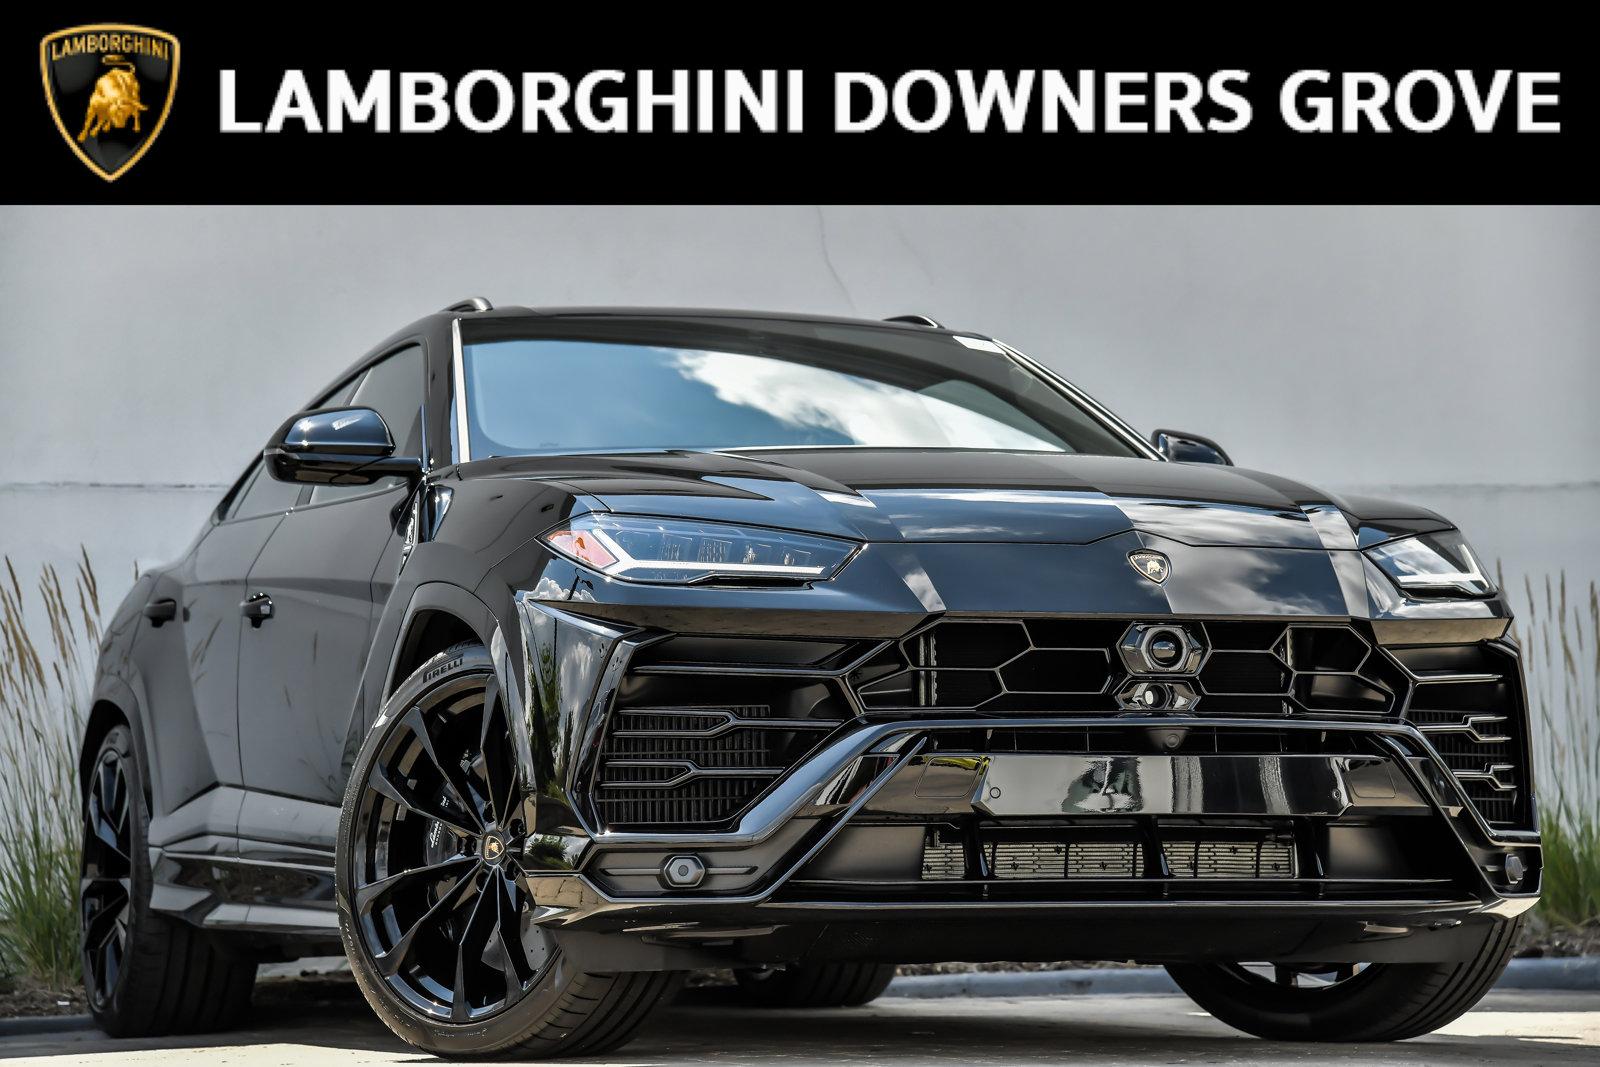 New 2022 Lamborghini Urus For Sale (Sold) | Lamborghini Downers 